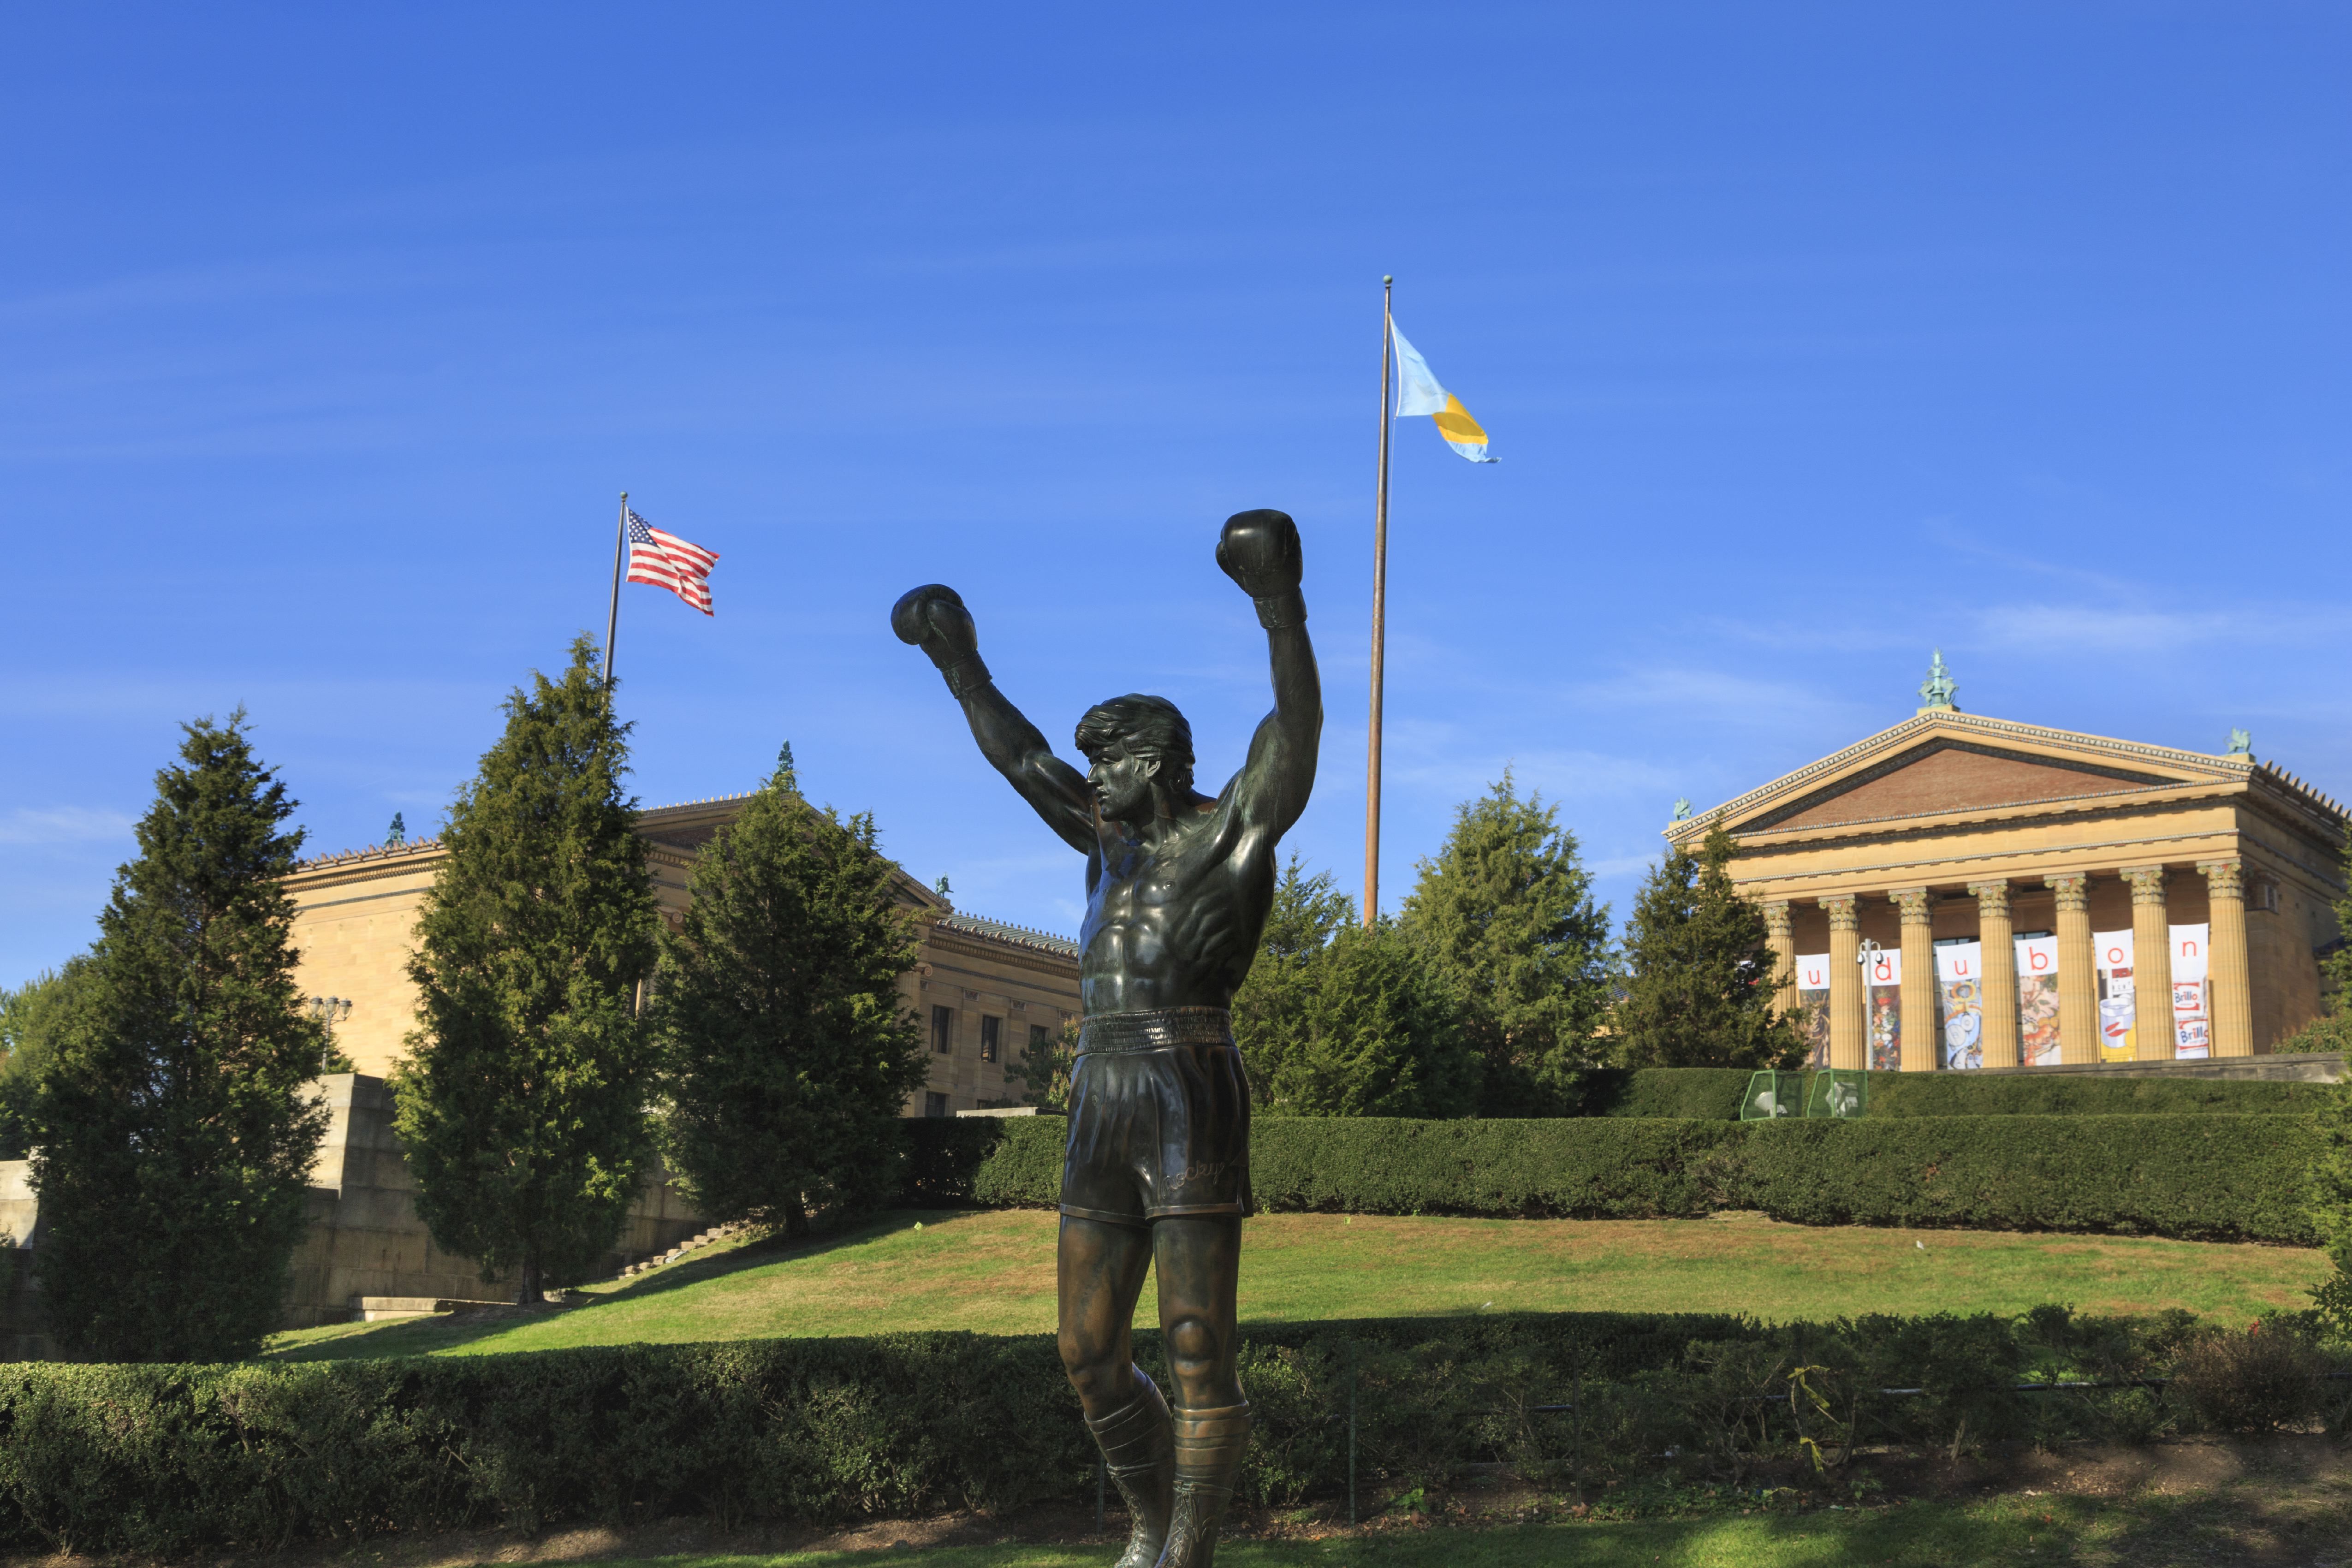 Rocky Balboa statue in front of the Philadelphia museum of art